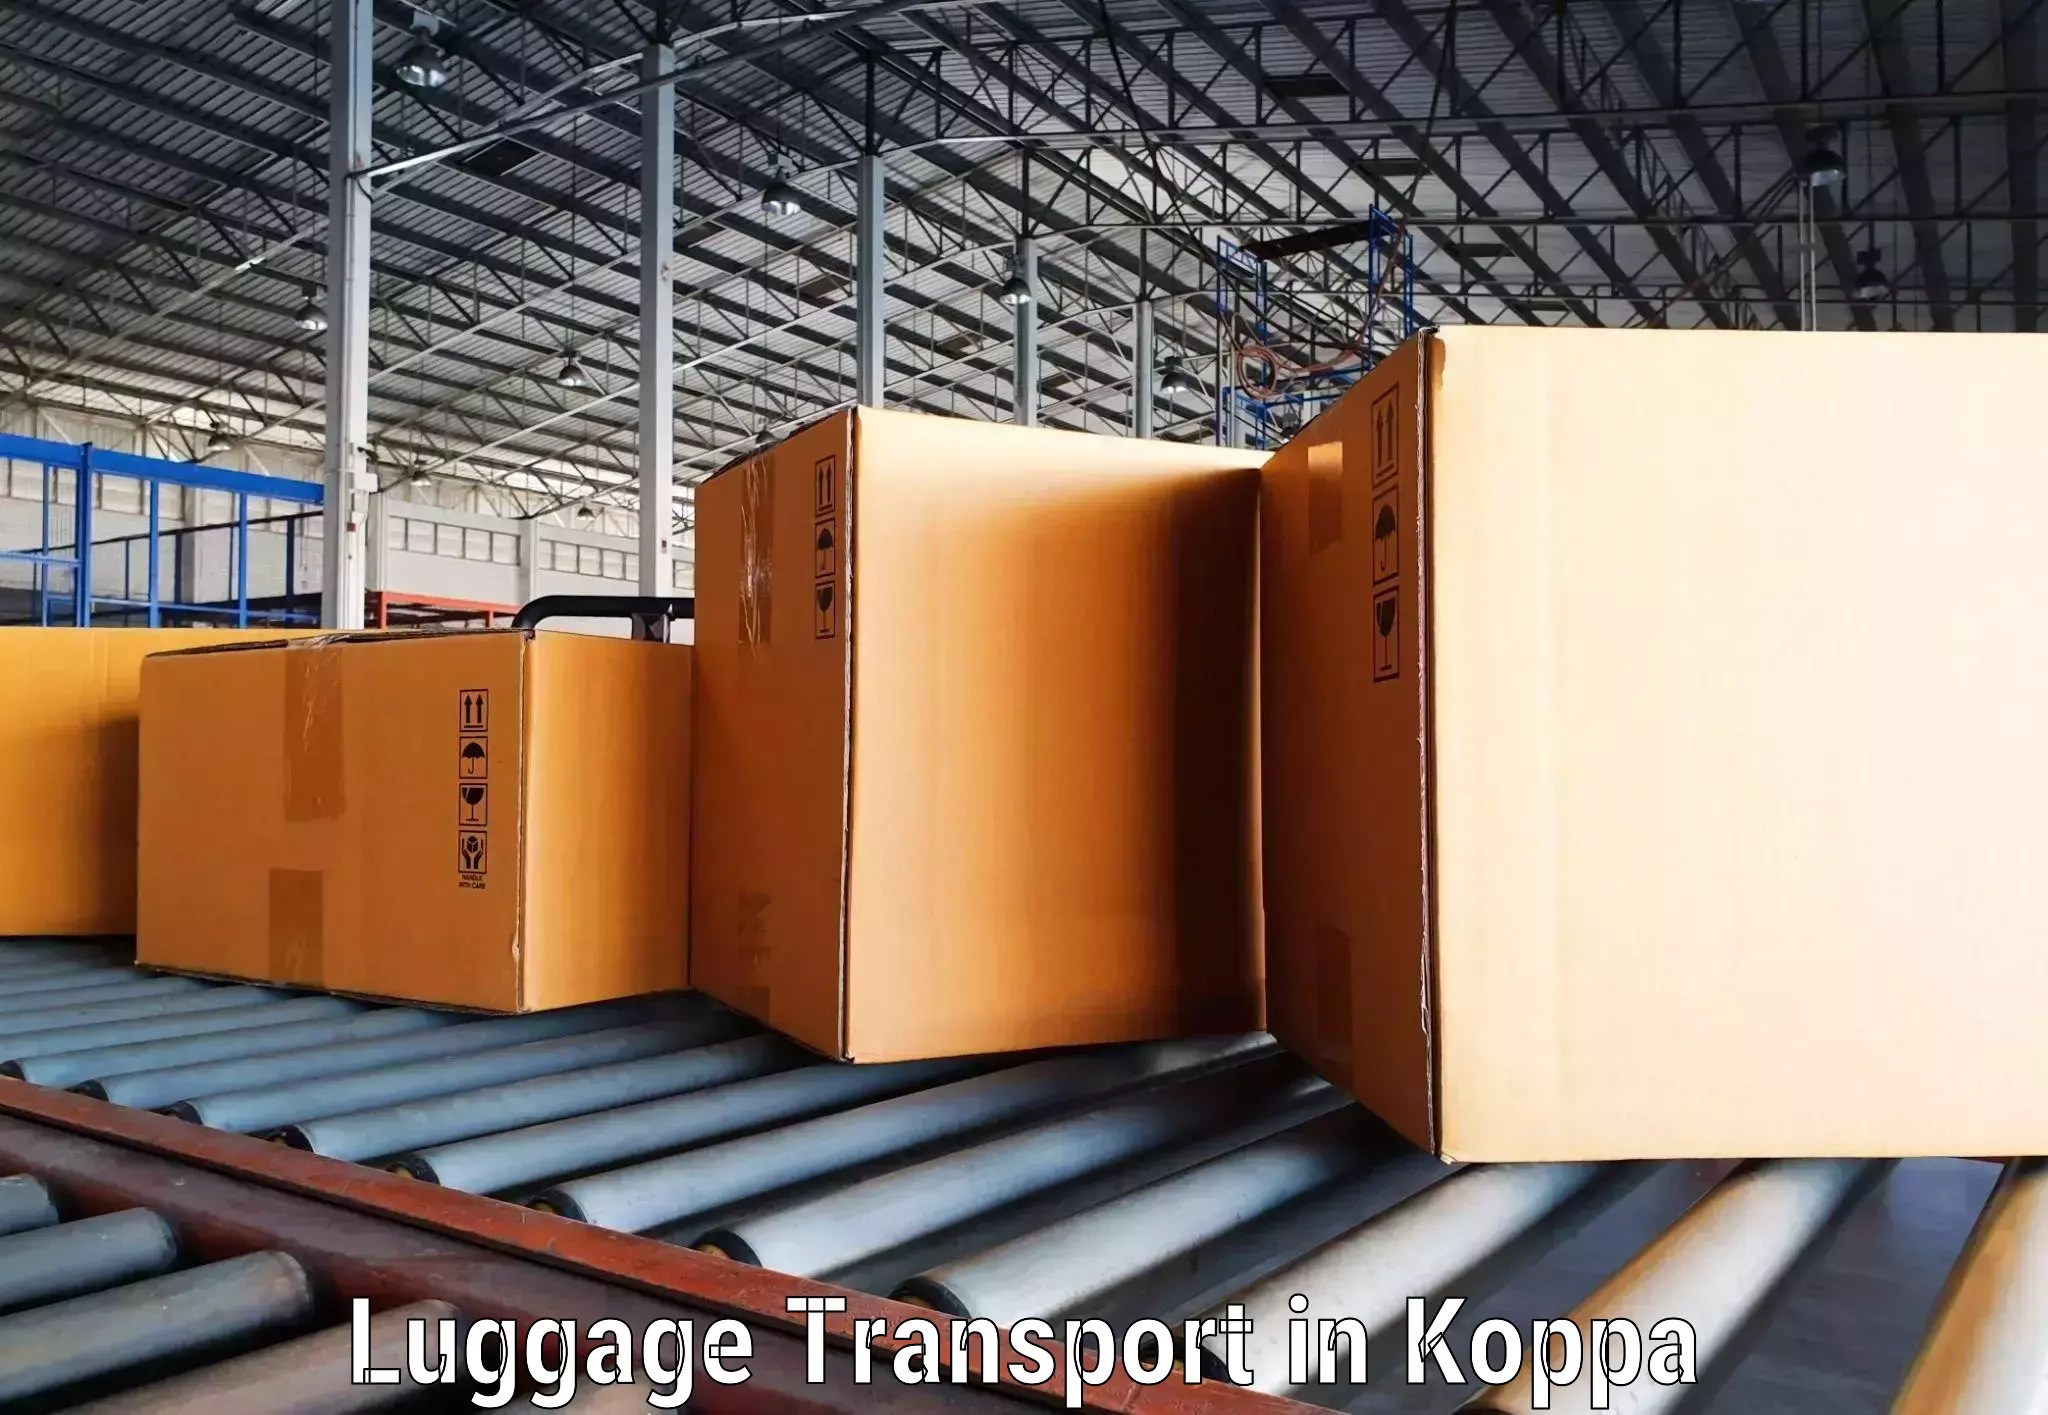 Multi-destination luggage transport in Koppa